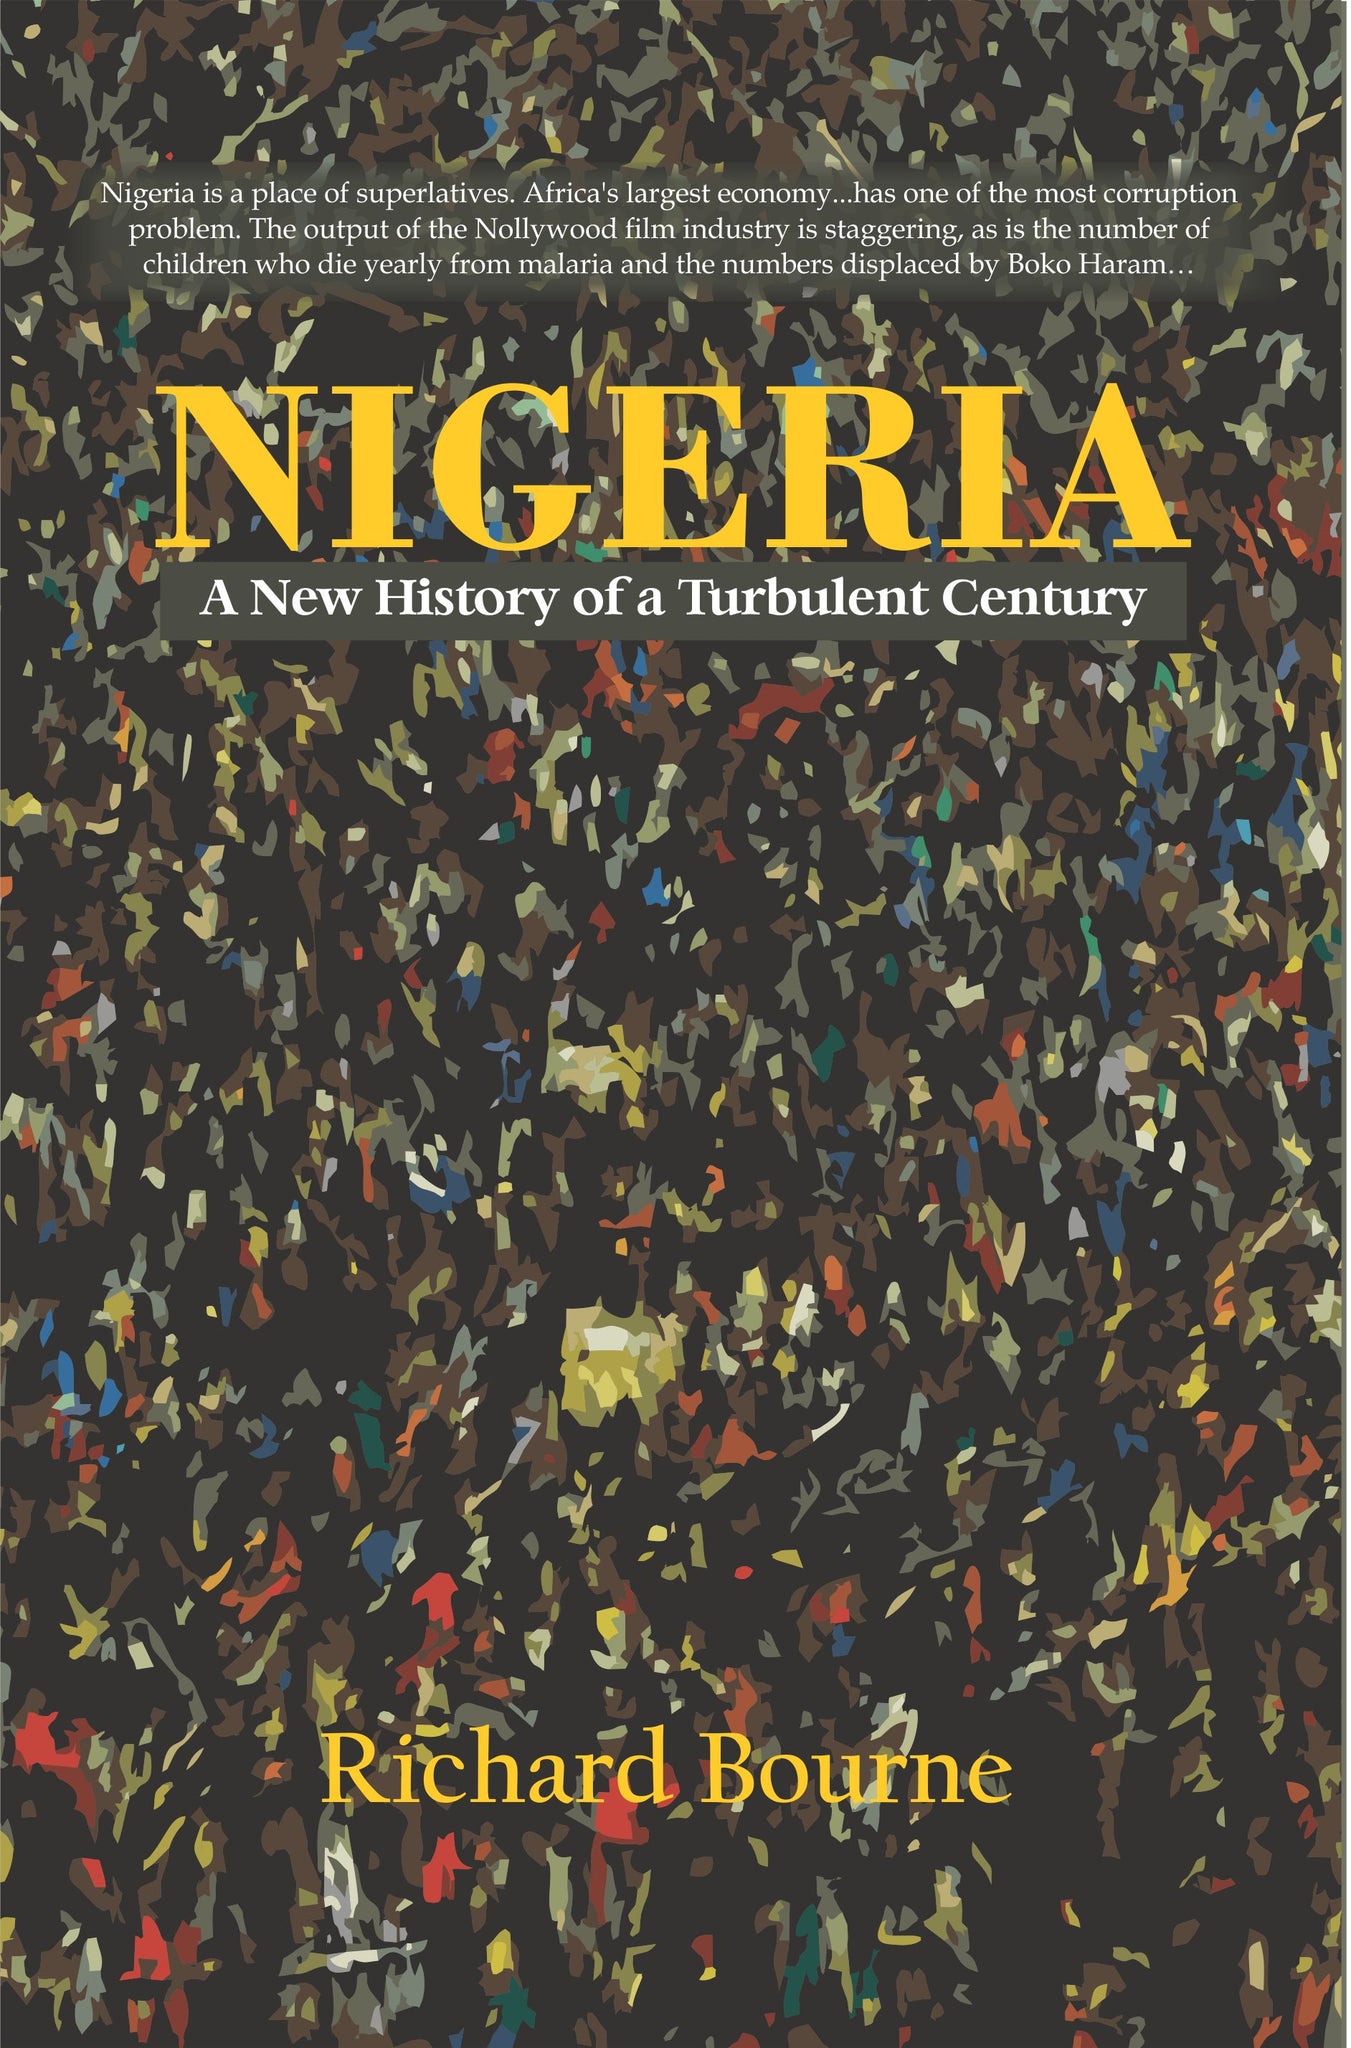 Nigeria: A New History of a Turbulent Century